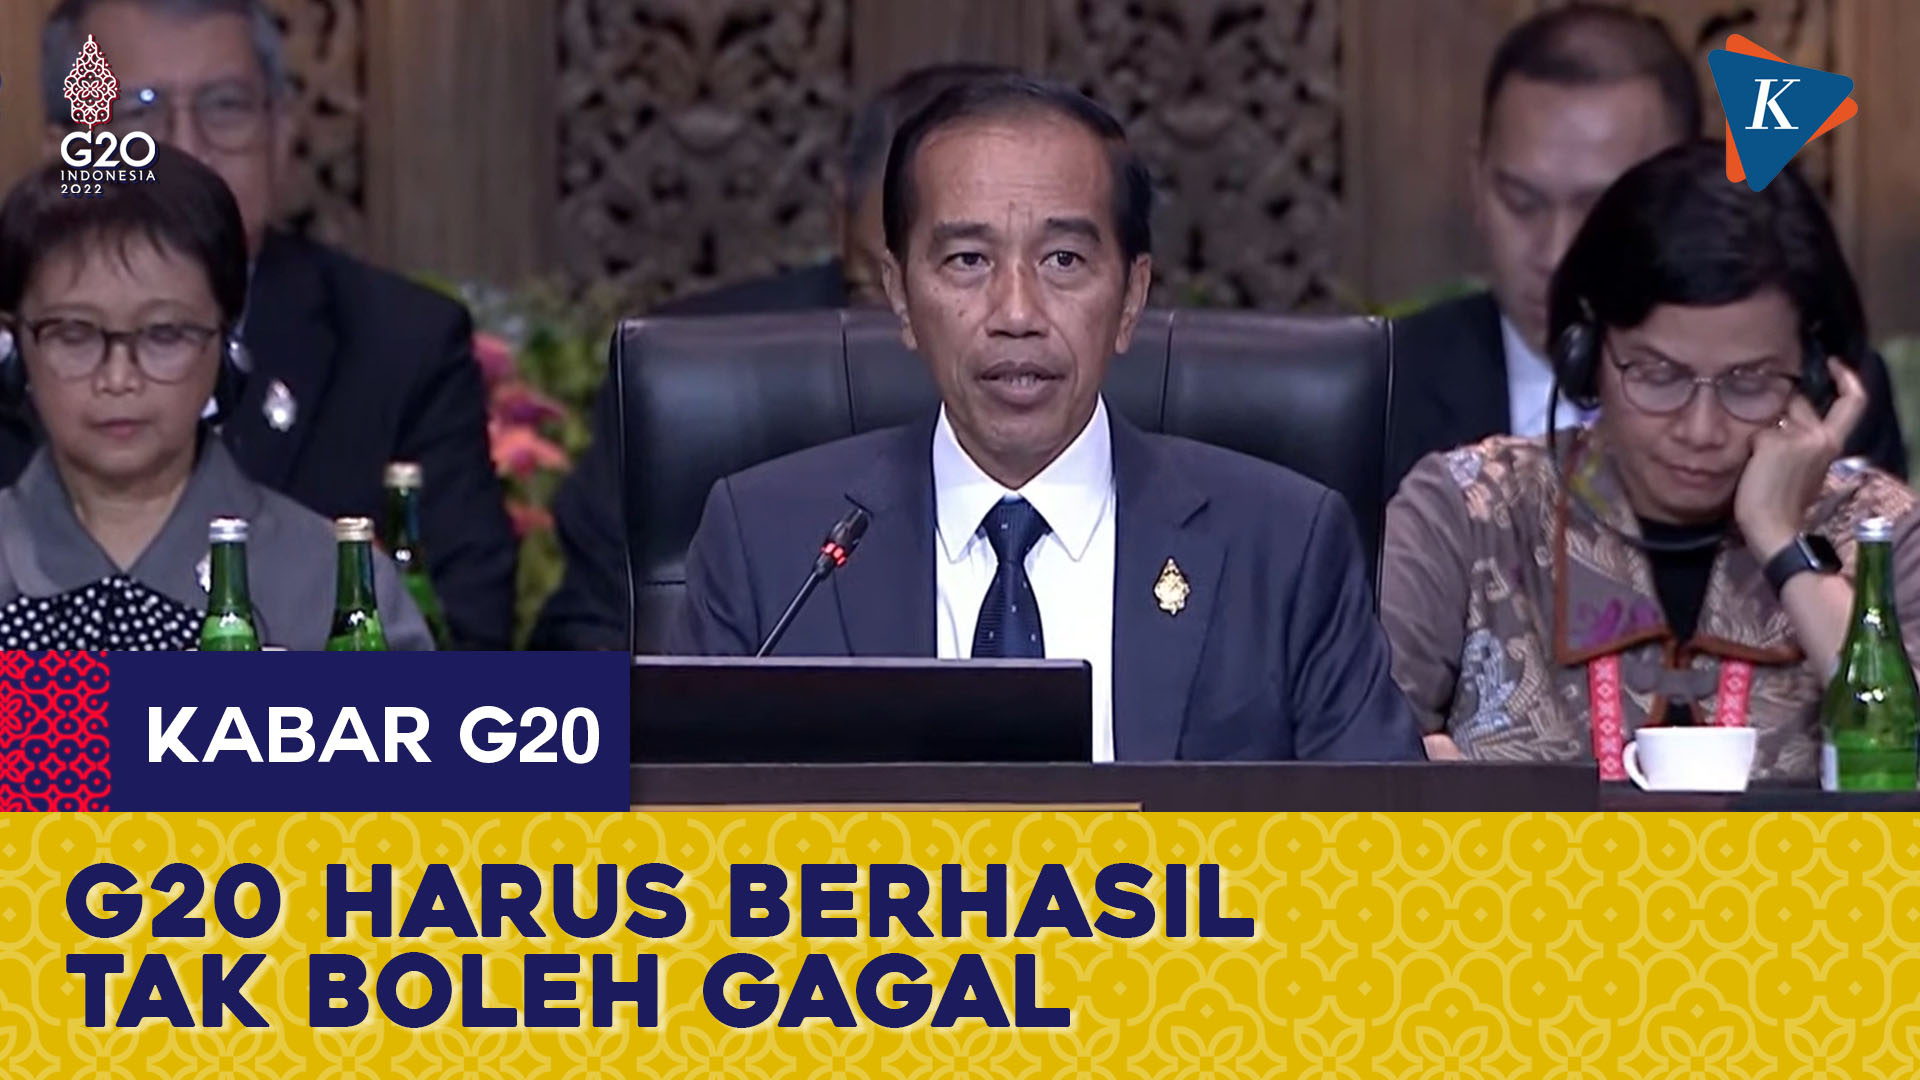 Presiden Jokowi Tak ingin G20 Gagal, Harus Berhasil